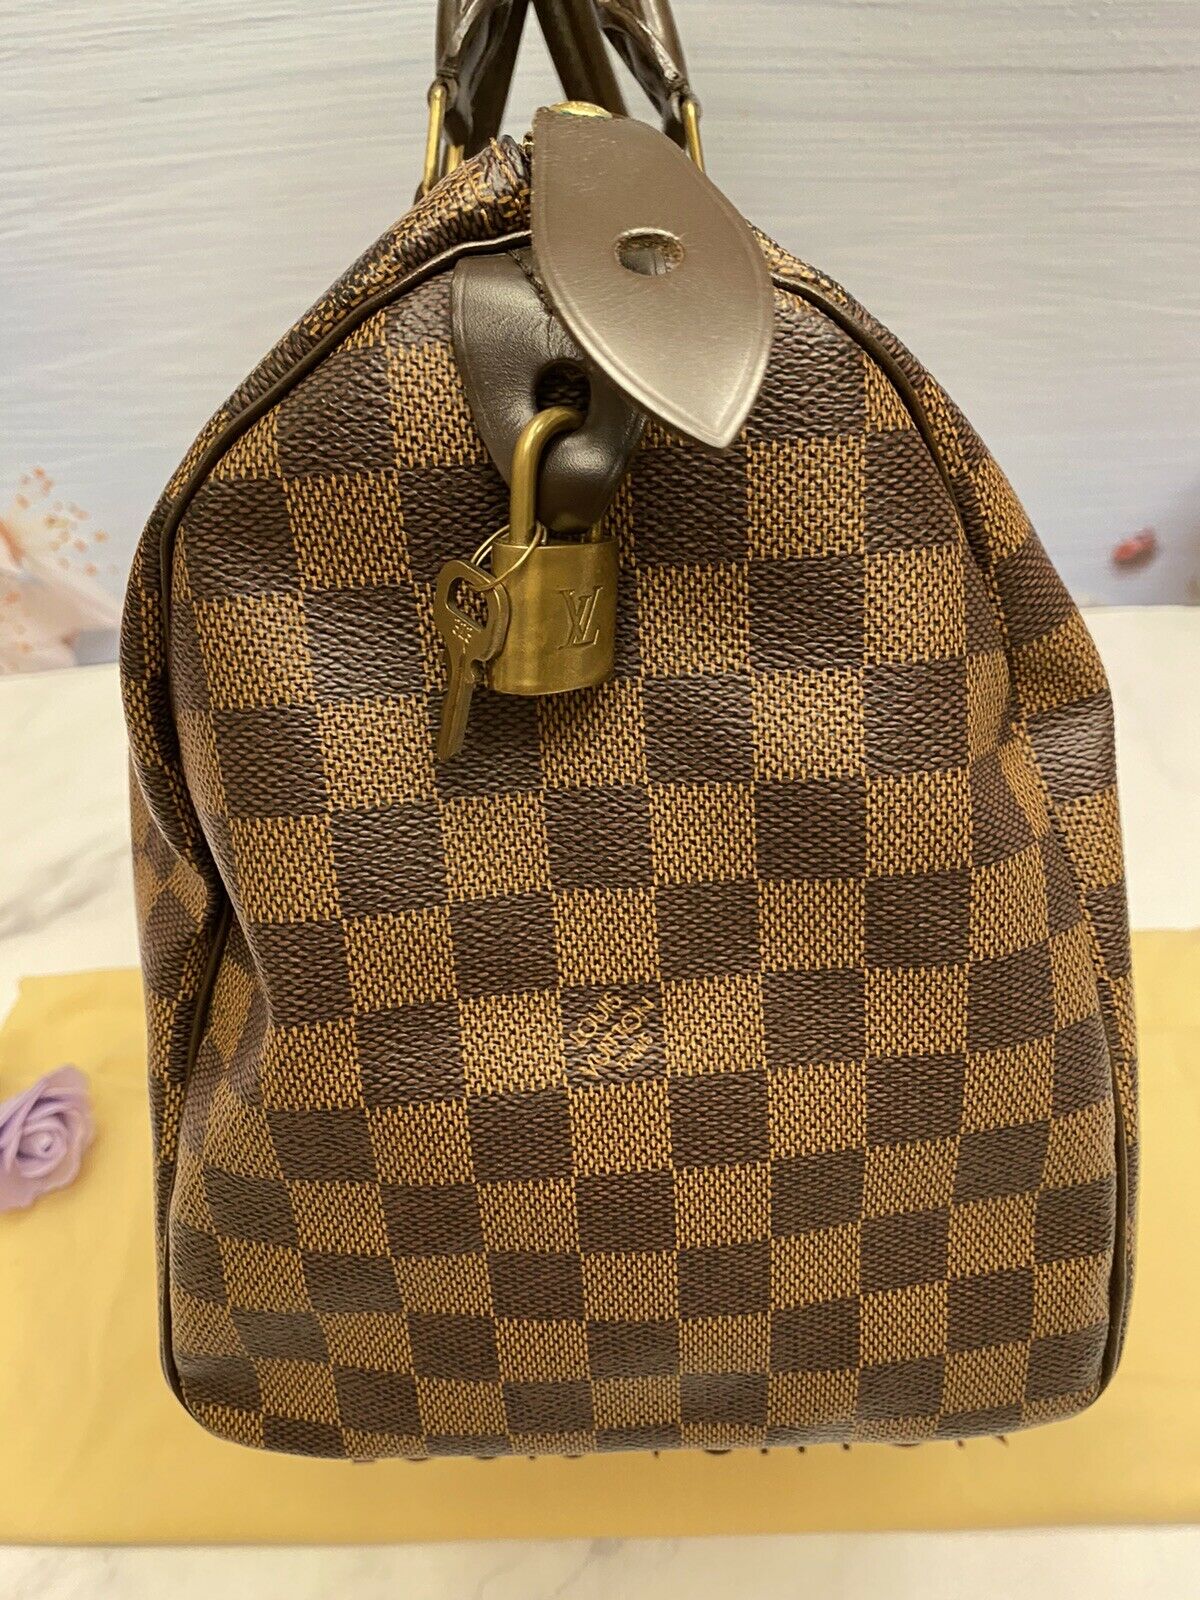 Louis Vuitton Speedy 35 Damier Azur Monogram BAG Tote Satchel with